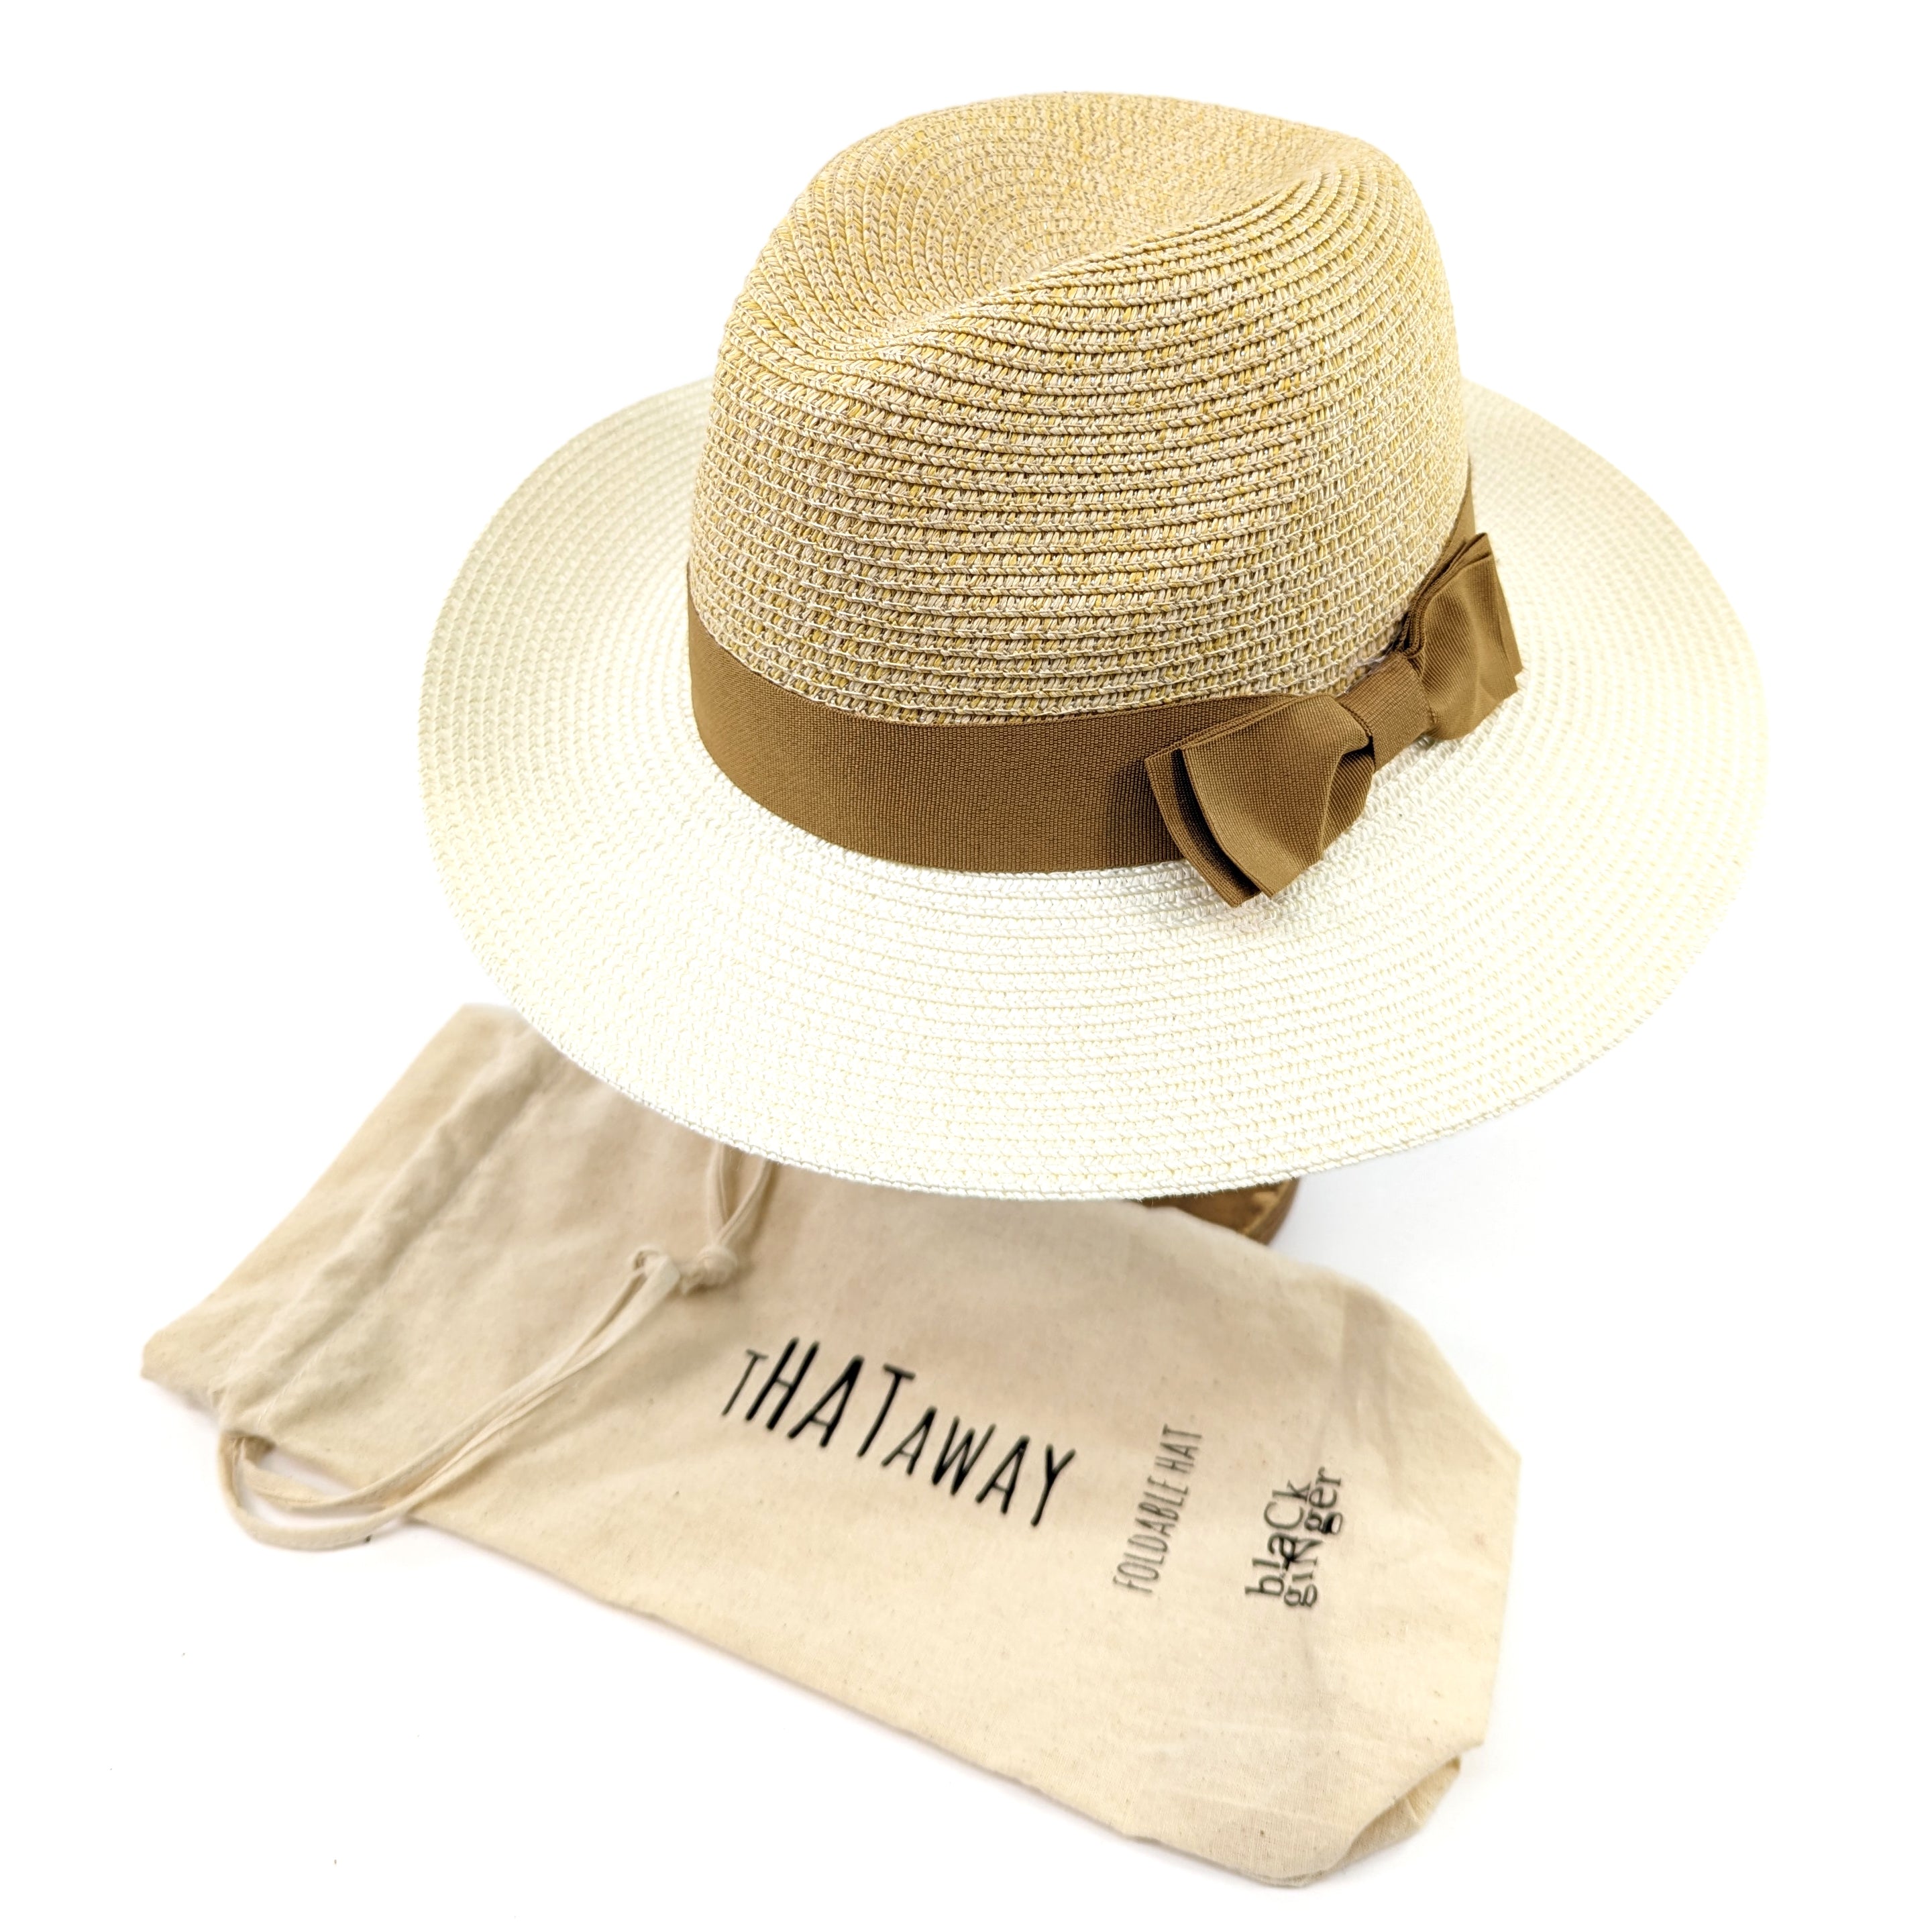 Chapeau Pliable Panama Bicolore - Naturel/Jaune (avec Sac)